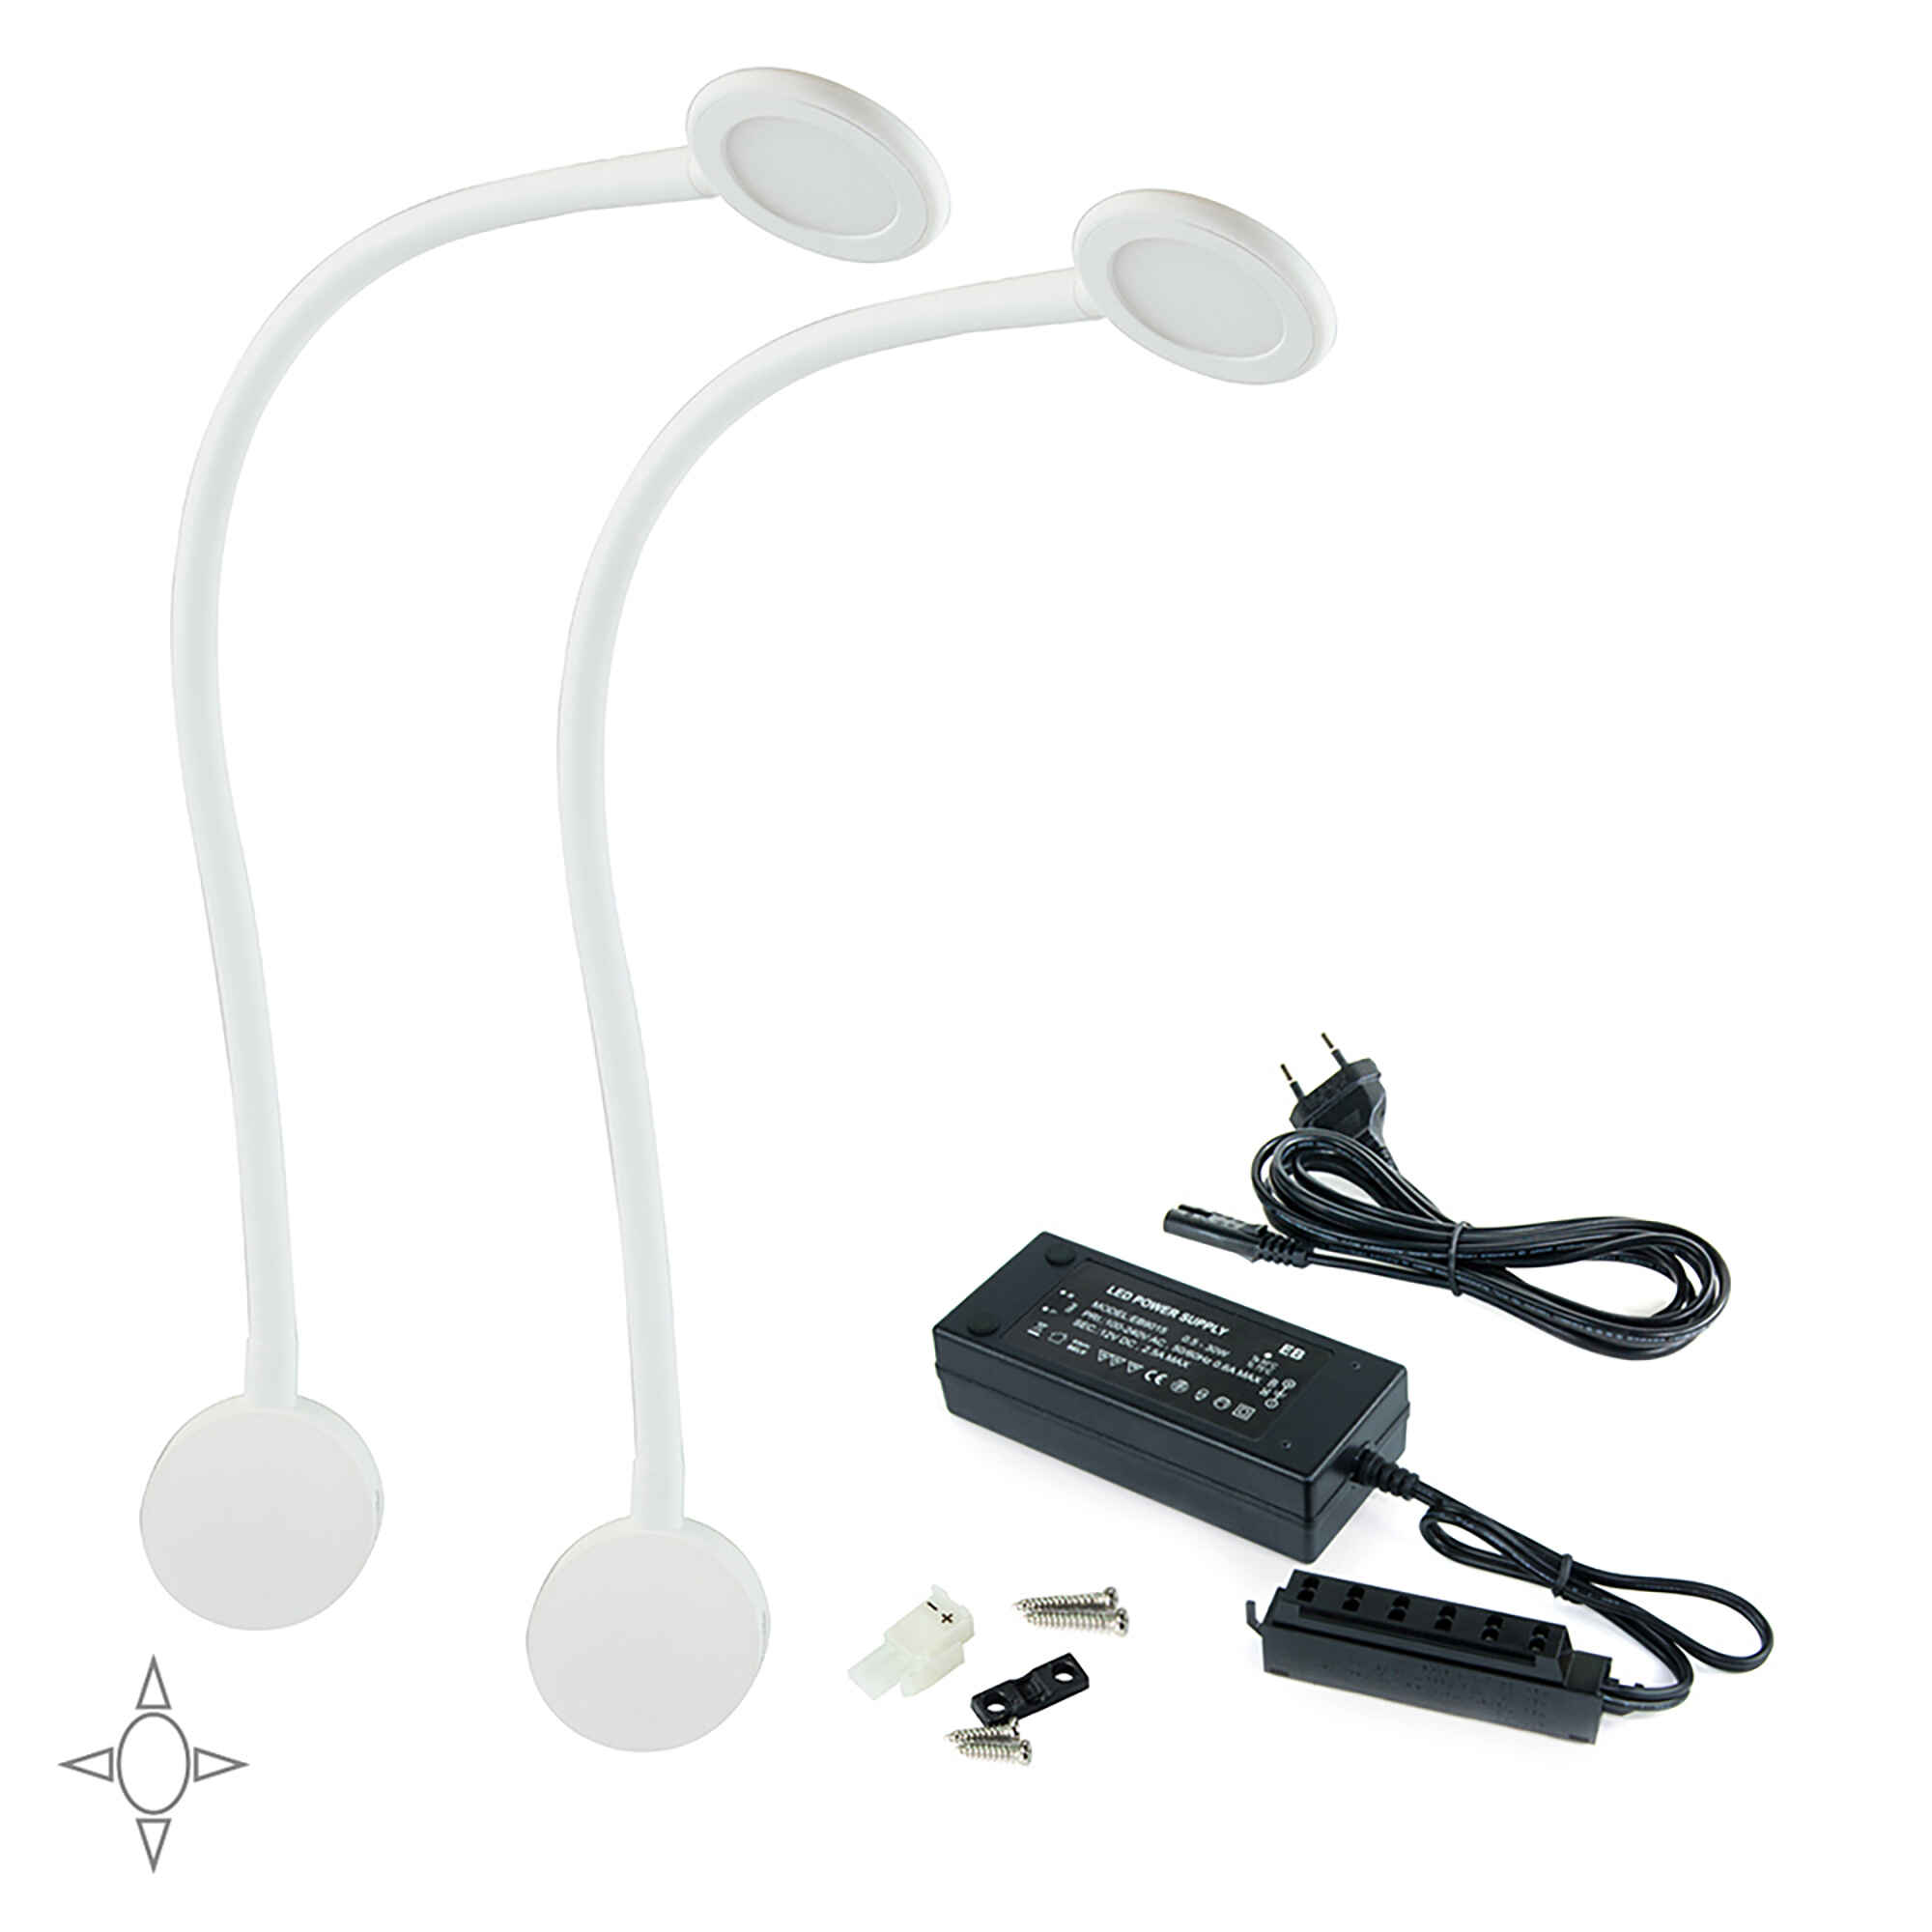 Aplique LED Kuma redondo, brazo flexible, sensor táctil, 2 USB, Luz blanca natural, Plástico, Blanco, 2 ud.